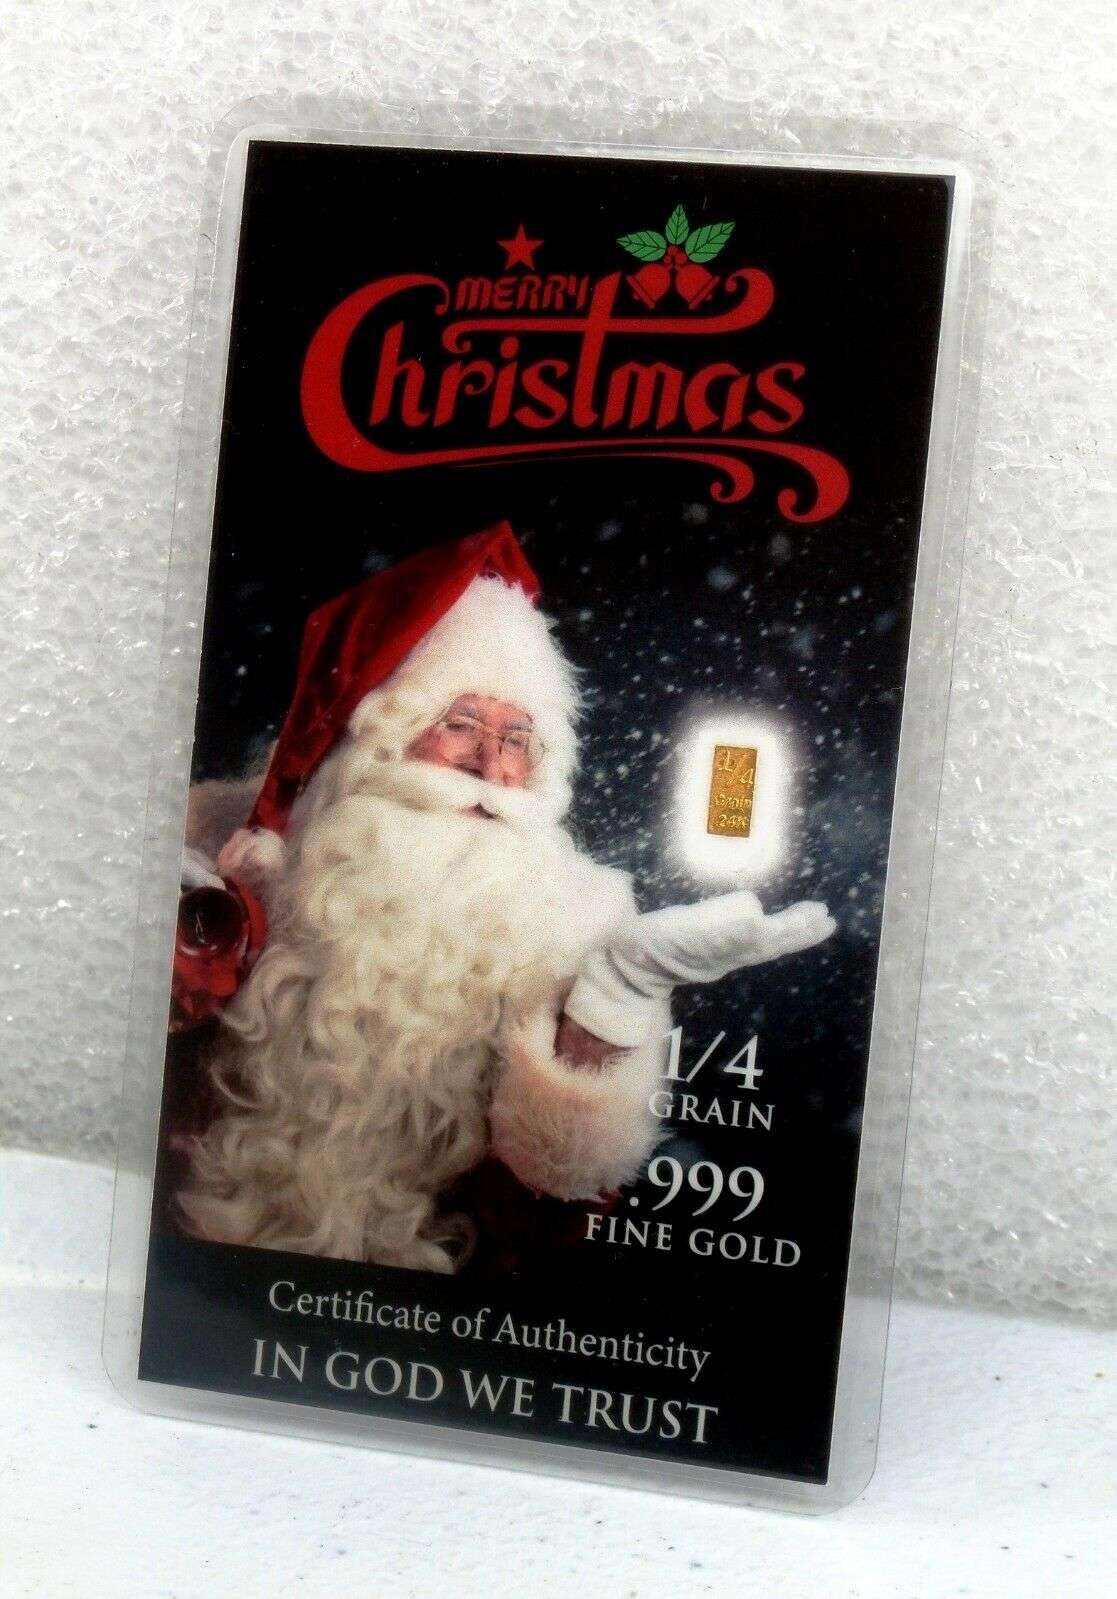 LOT 2 X 1/4 GRAIN .9999 FINE 24K GOLD BULLION BAR “A PAIR OF GOLD SANTAS” CHRISTMAS - IN COA CARD